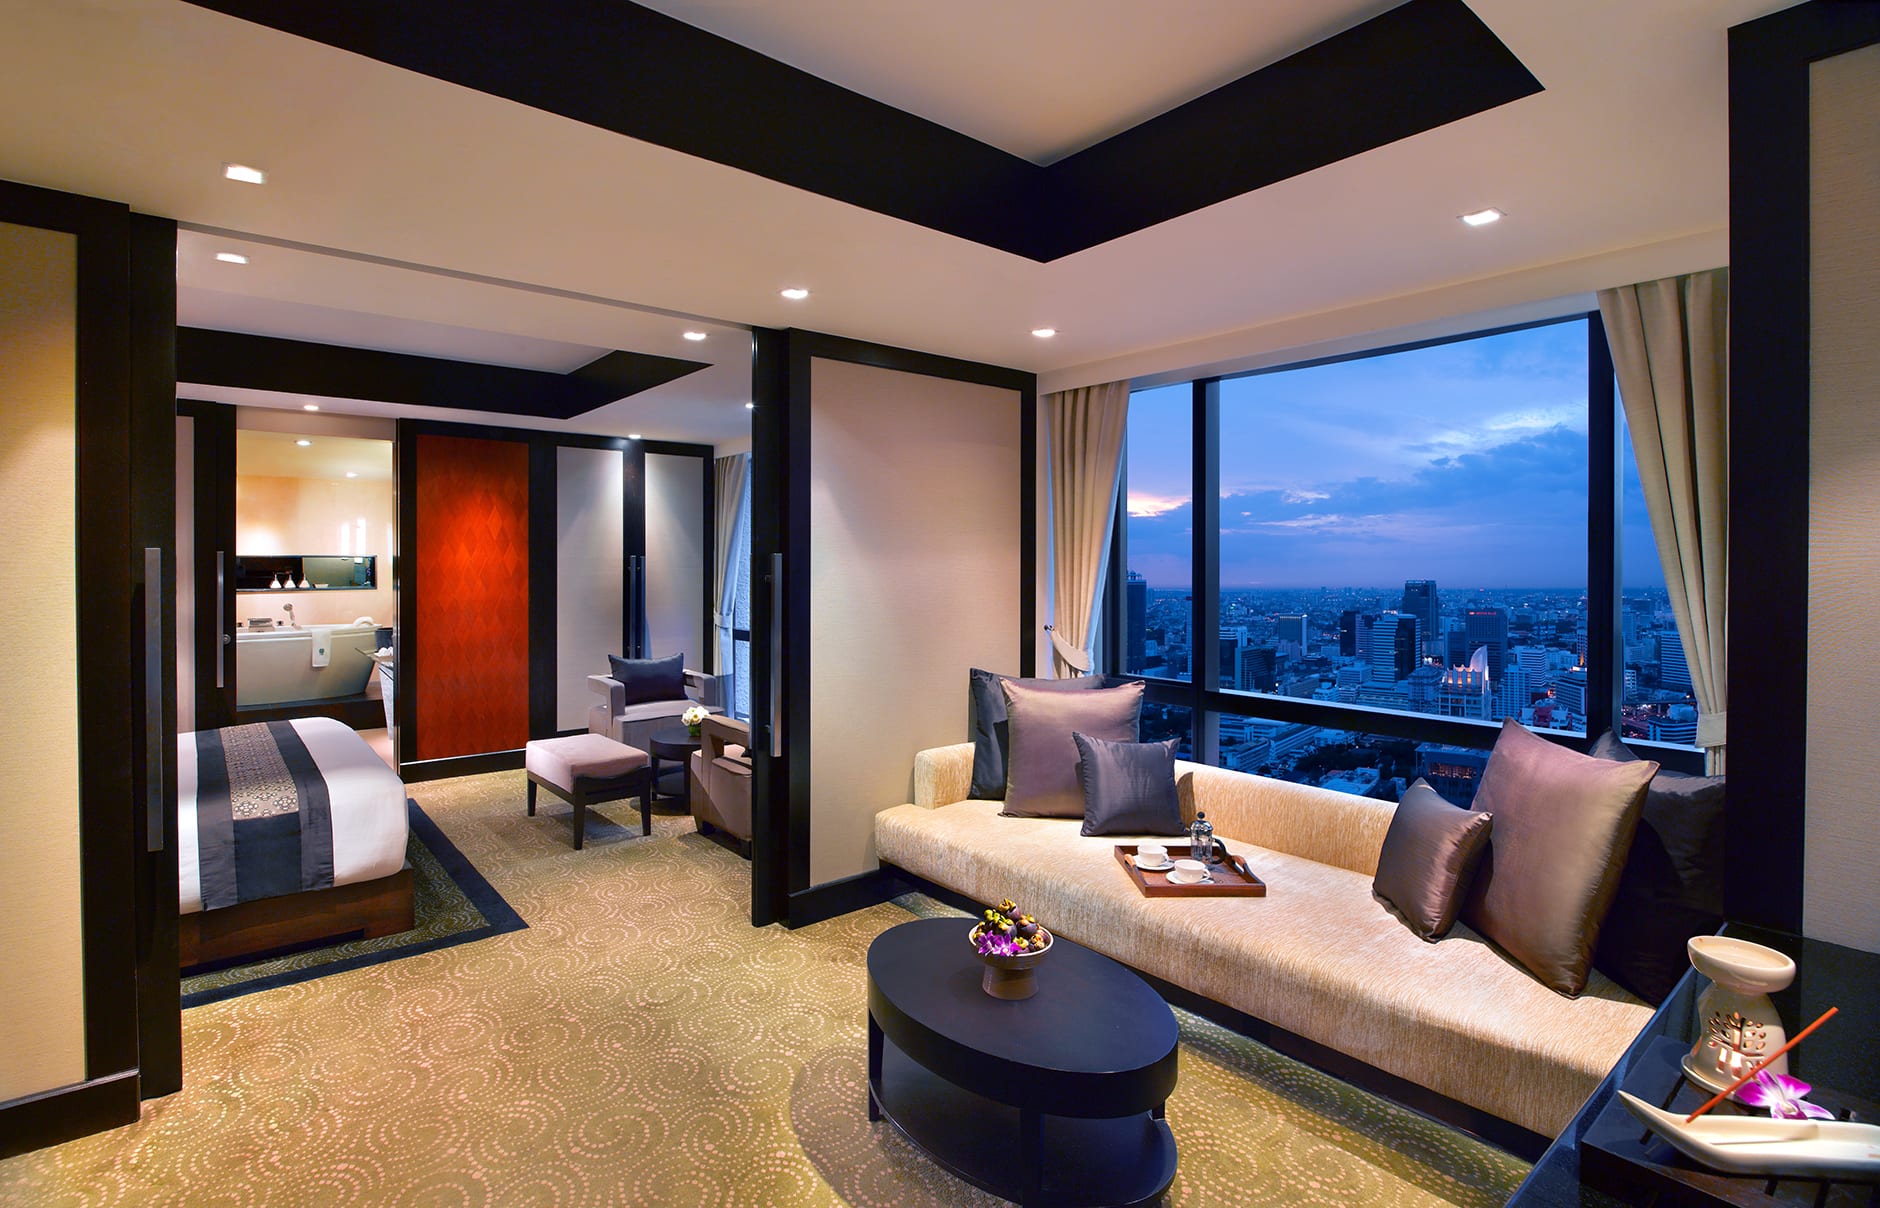 Banyan Tree Bangkok, Thailand. Hotel Review by TravelPlusStyle. Photo © Banyan Tree Hotels & Resorts